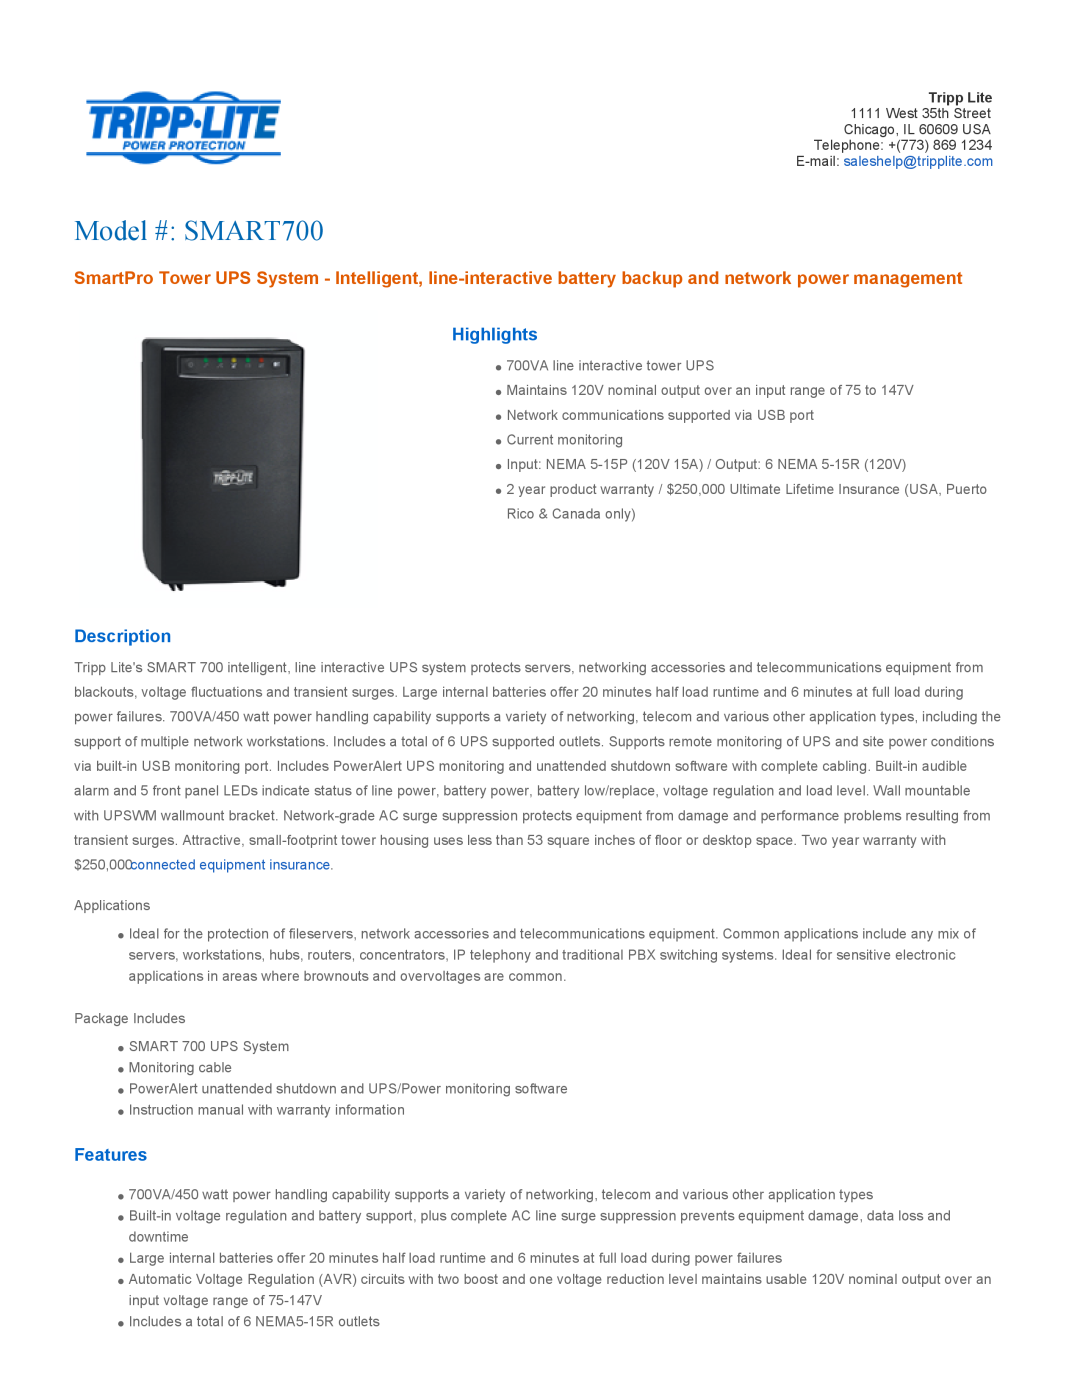 Tripp Lite warranty Highlights, Description, Features, Model # SMART700, $250,000connected equipment insurance 